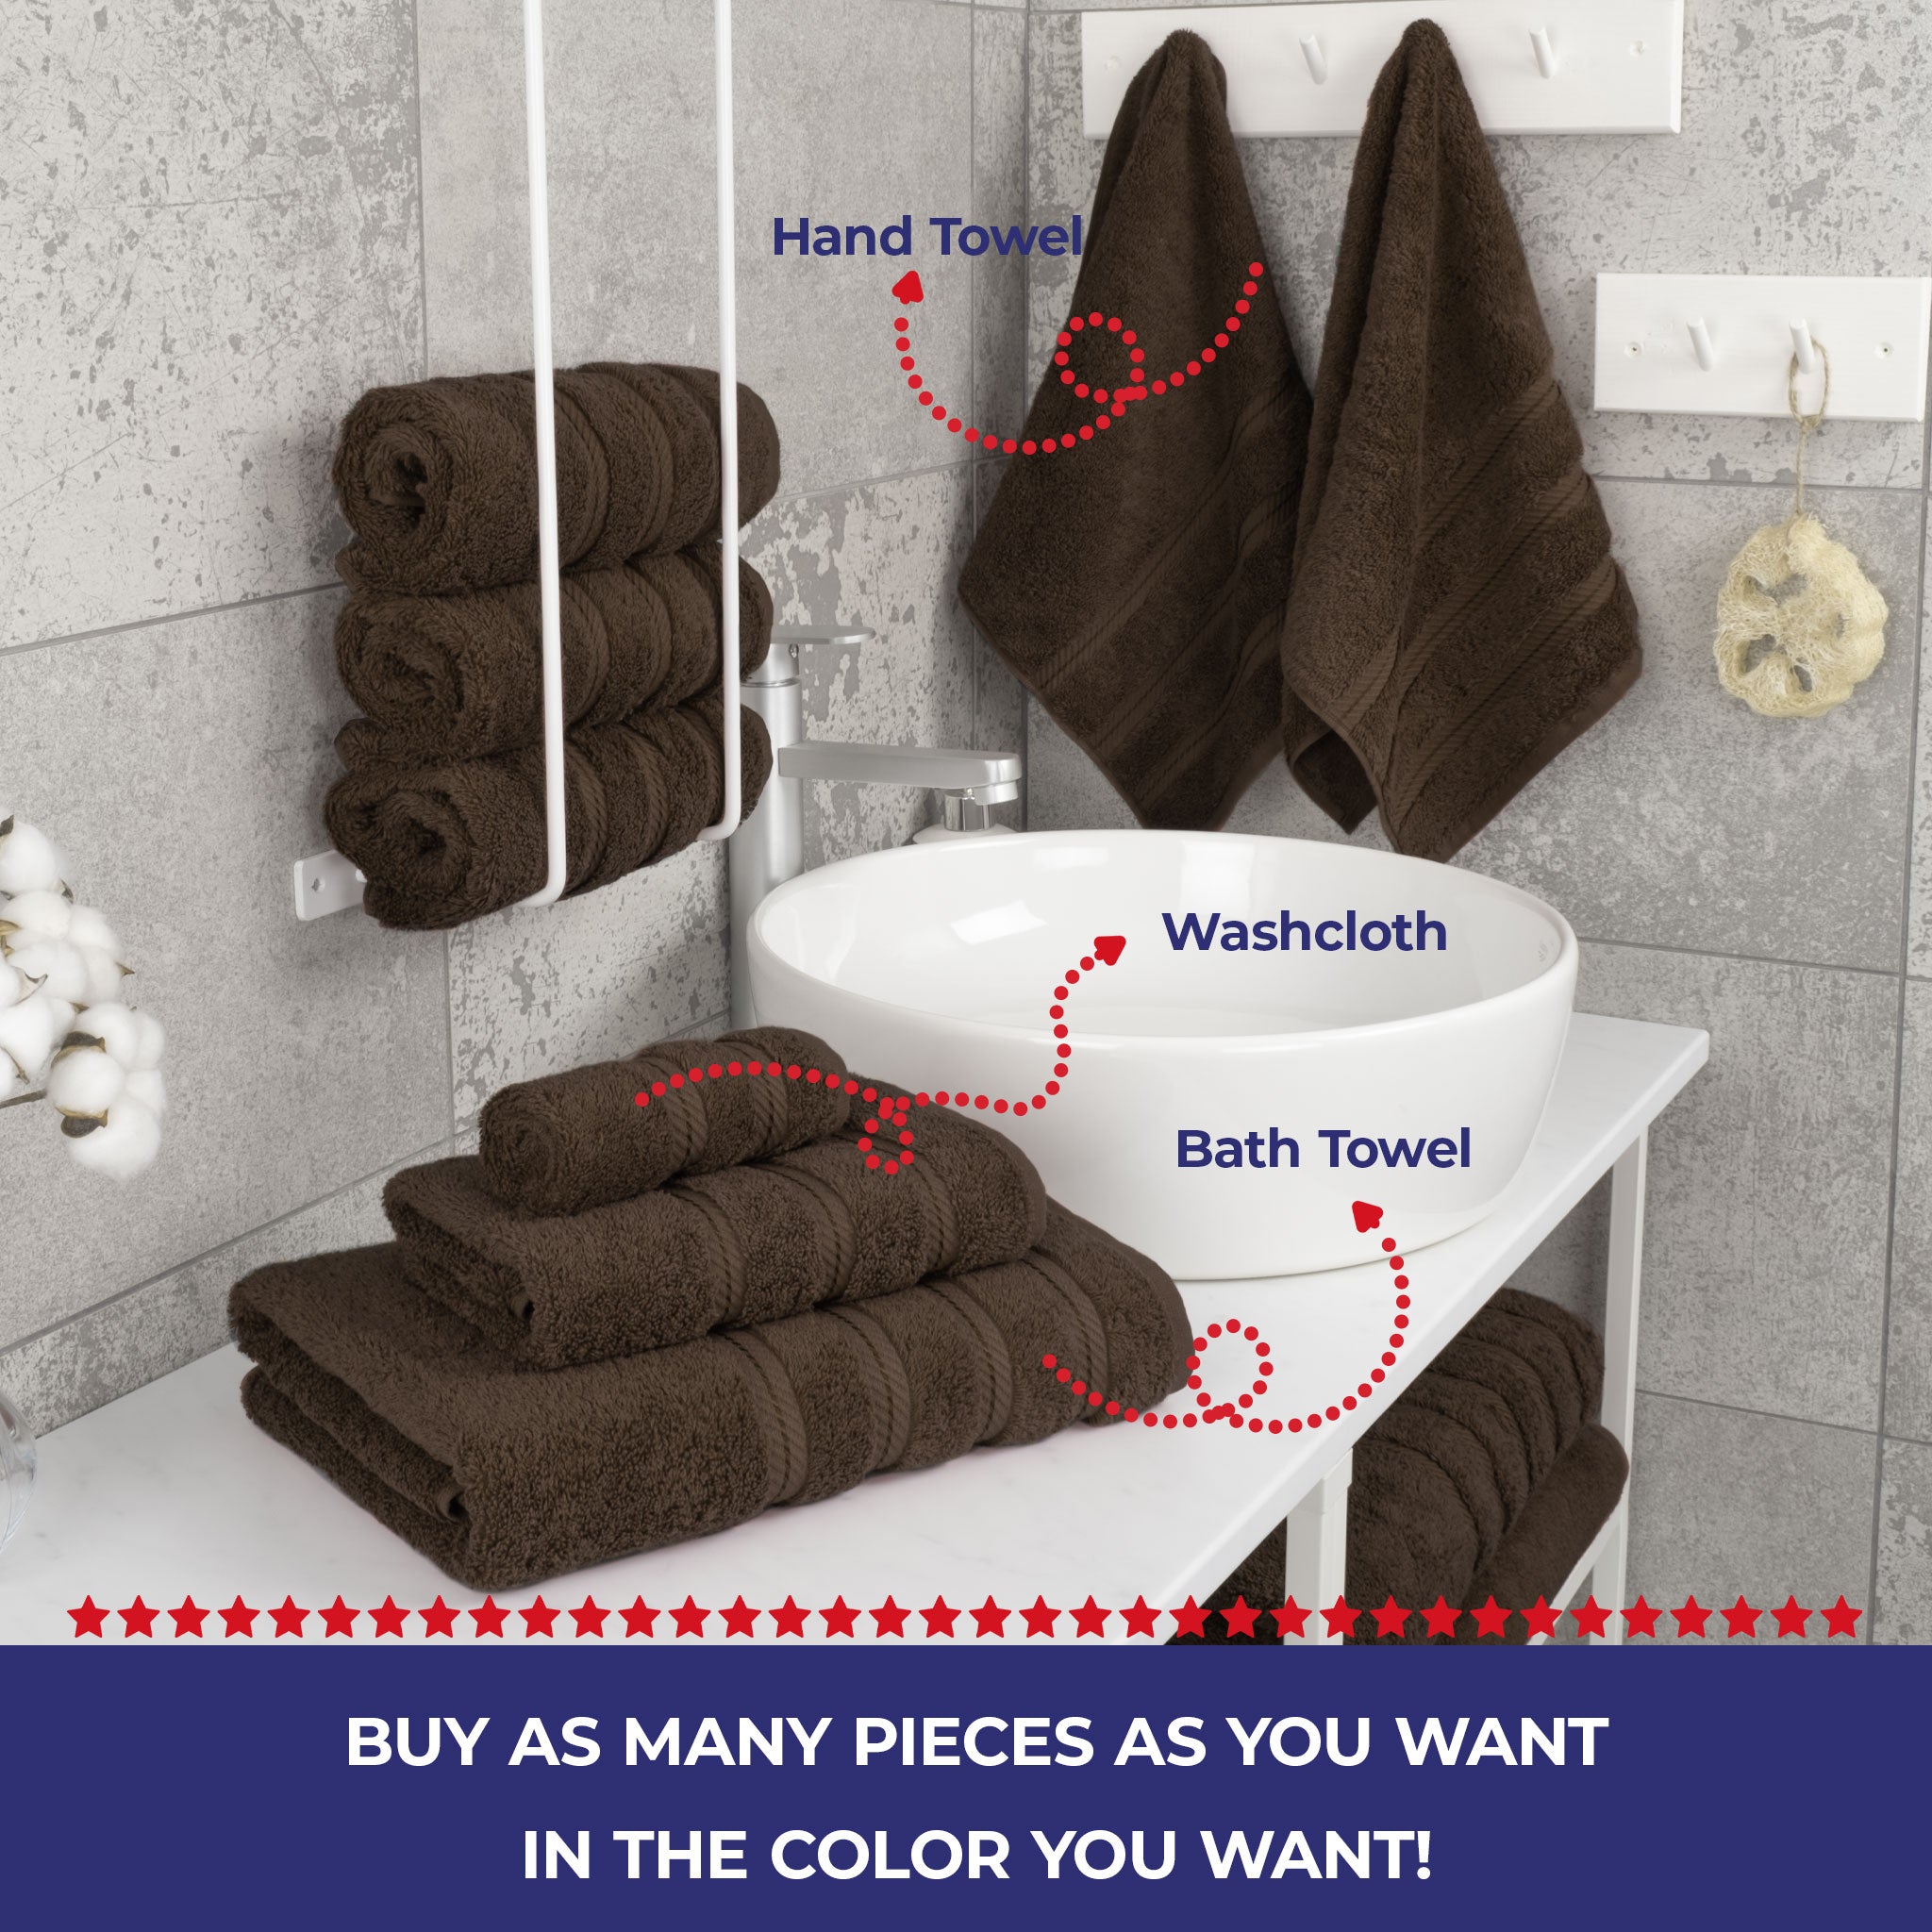 American Soft Linen - Single Piece Turkish Cotton Hand Towels - Chocolate-Brown - 4